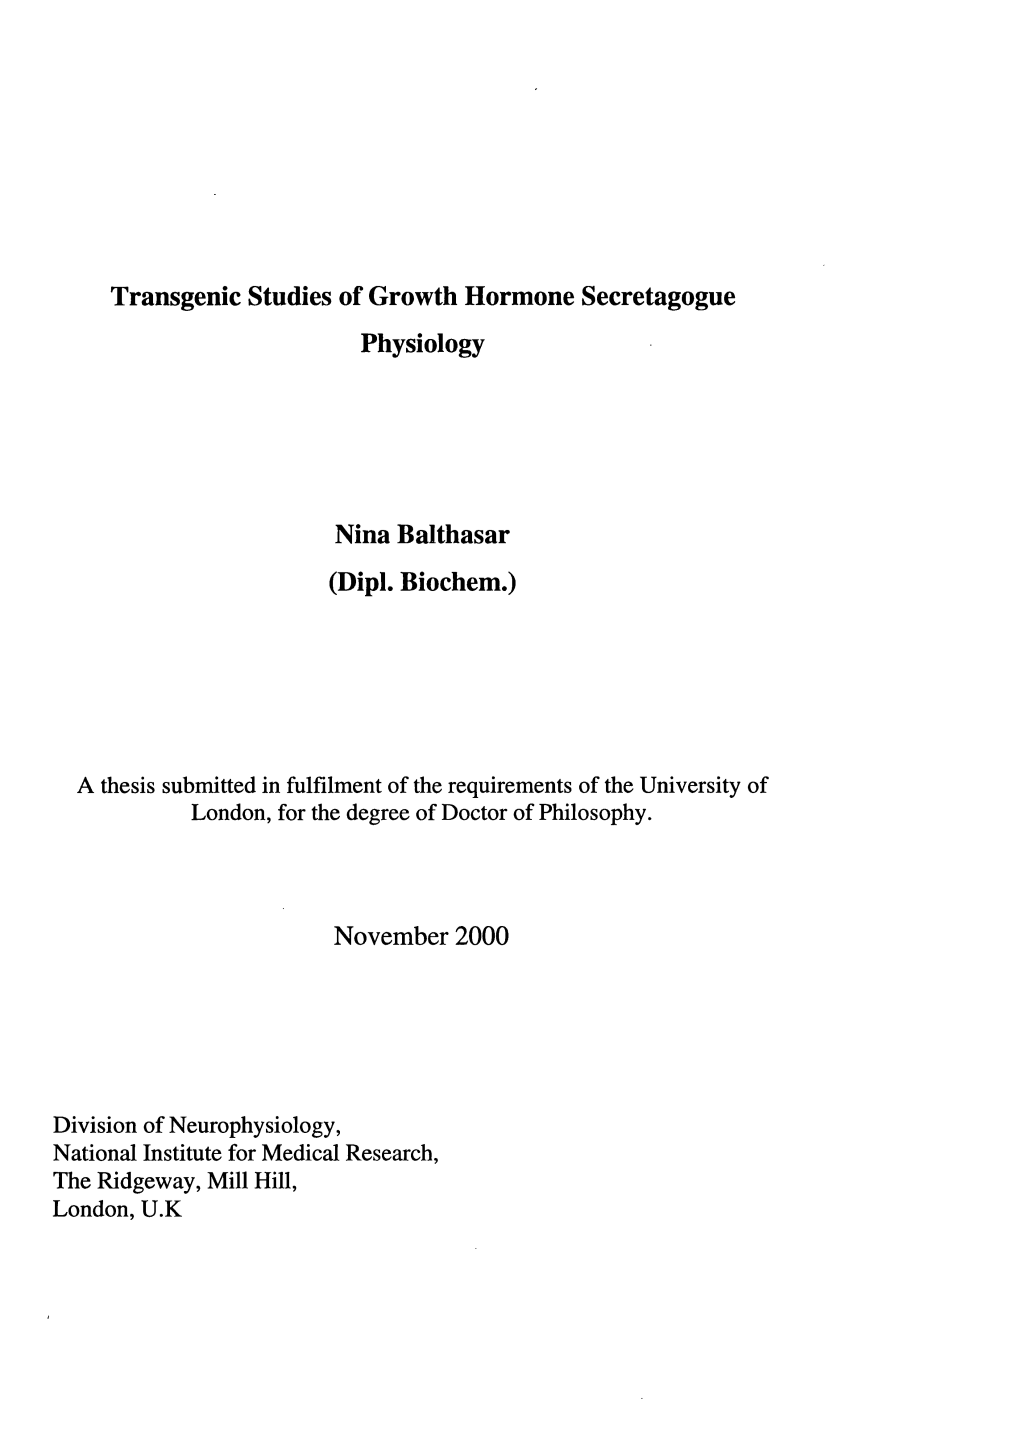 Transgenic Studies of Growth Hormone Secretagogue Physiology